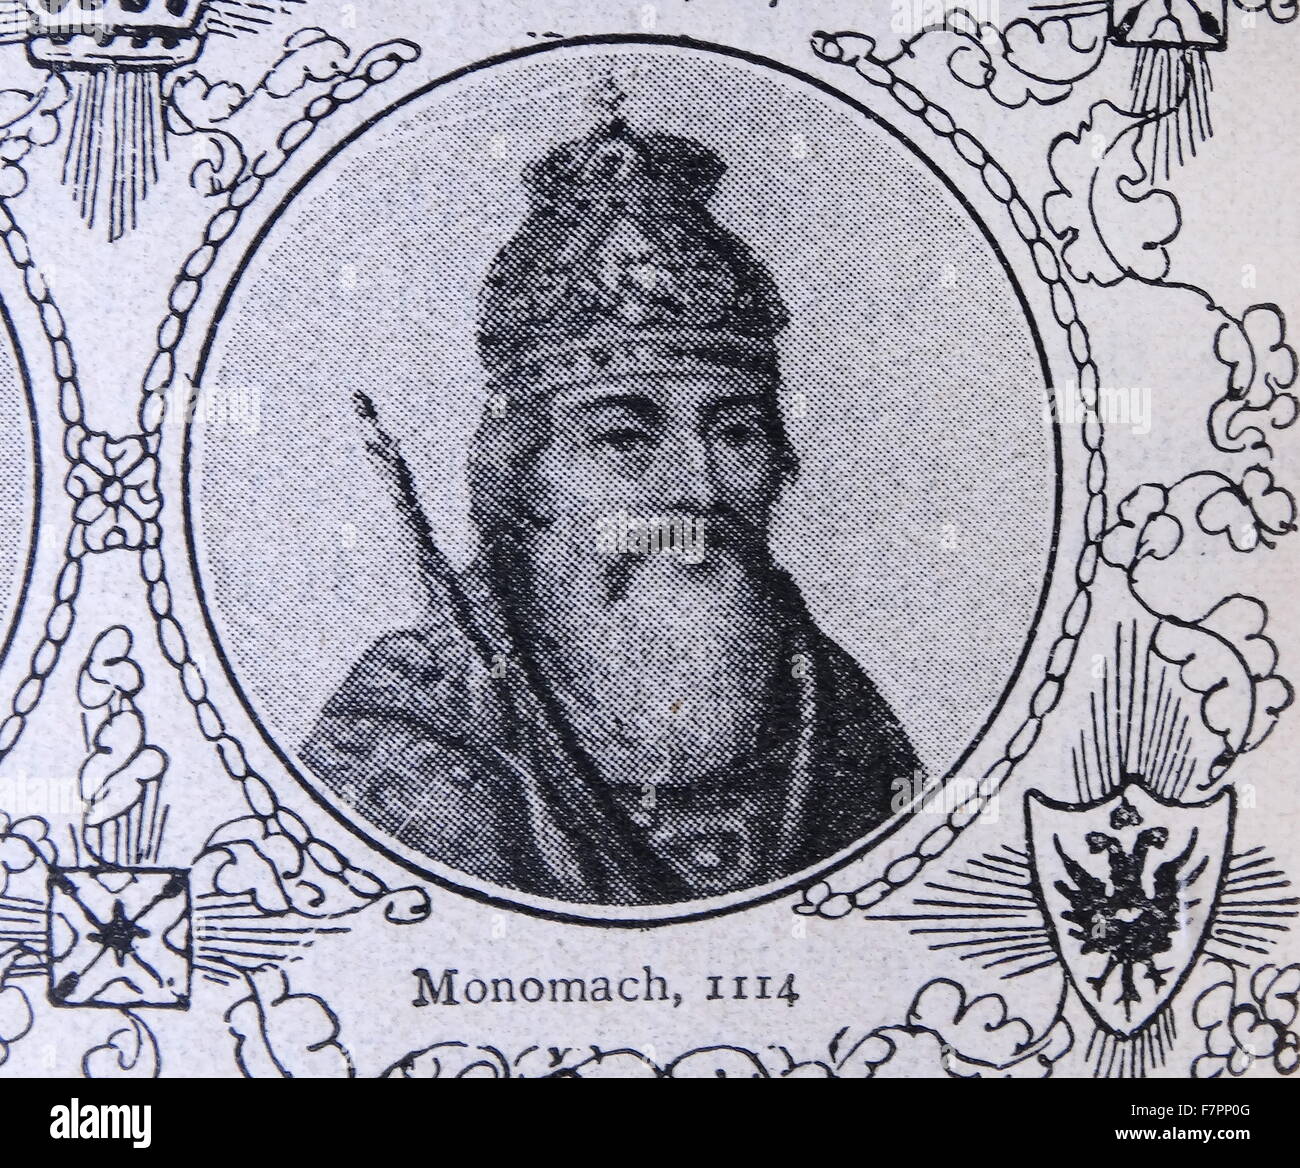 Vladimir II Monomakh (1053 – 1125) reigned as Velikiy Kniaz (Grand Prince) of Kievan Rus' from 1113 to 1125. Stock Photo